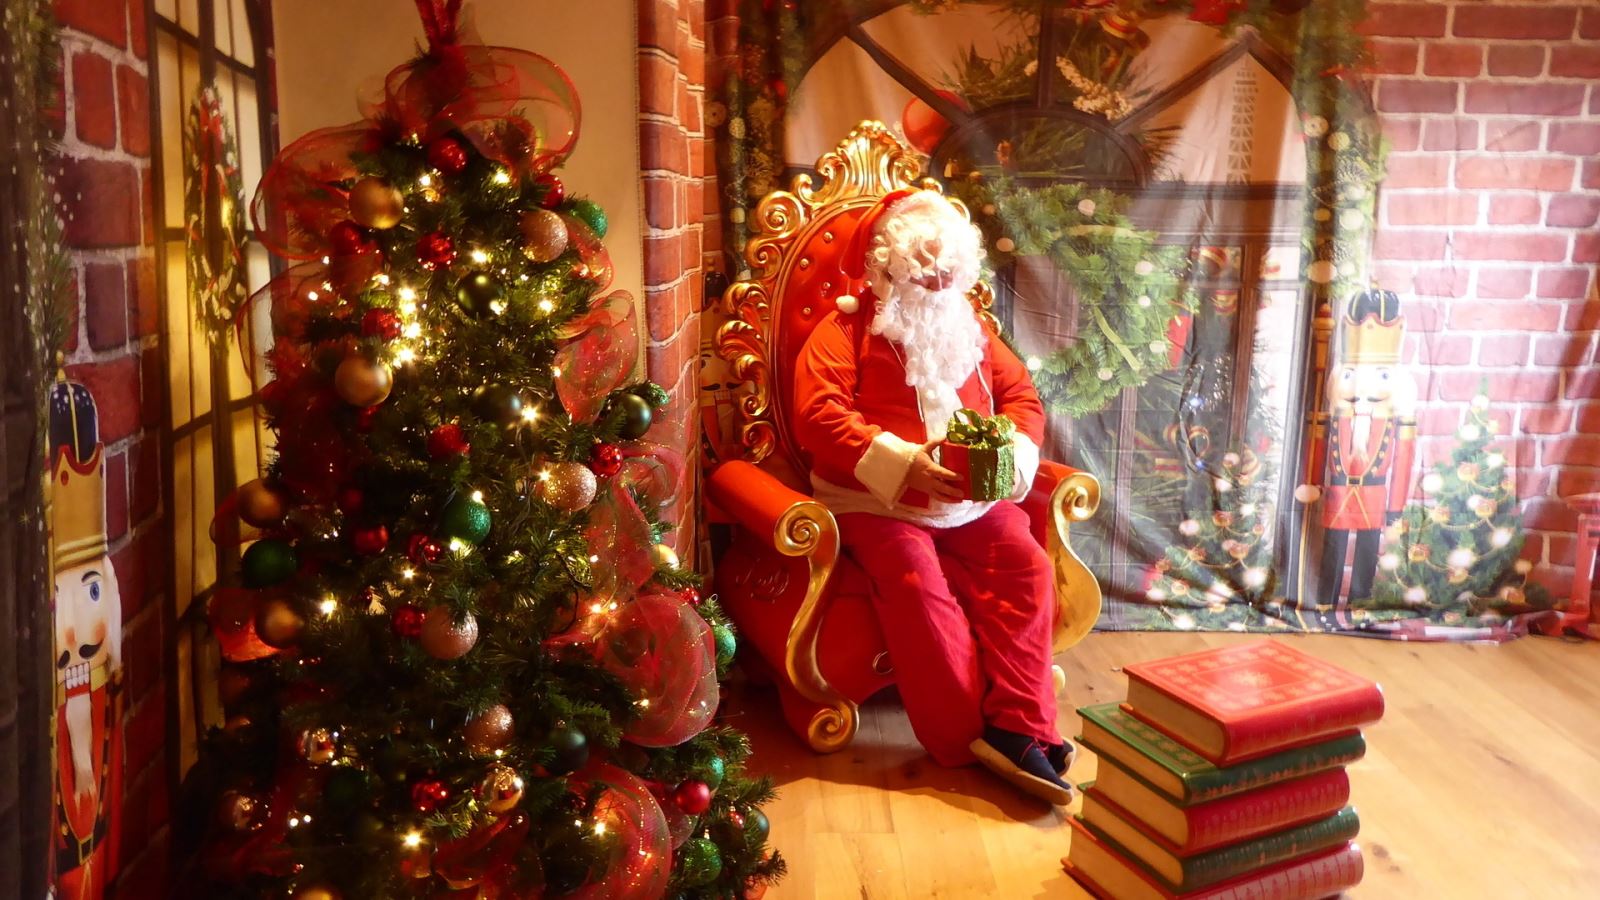 Santa sat next to a Christmas tree holding a present